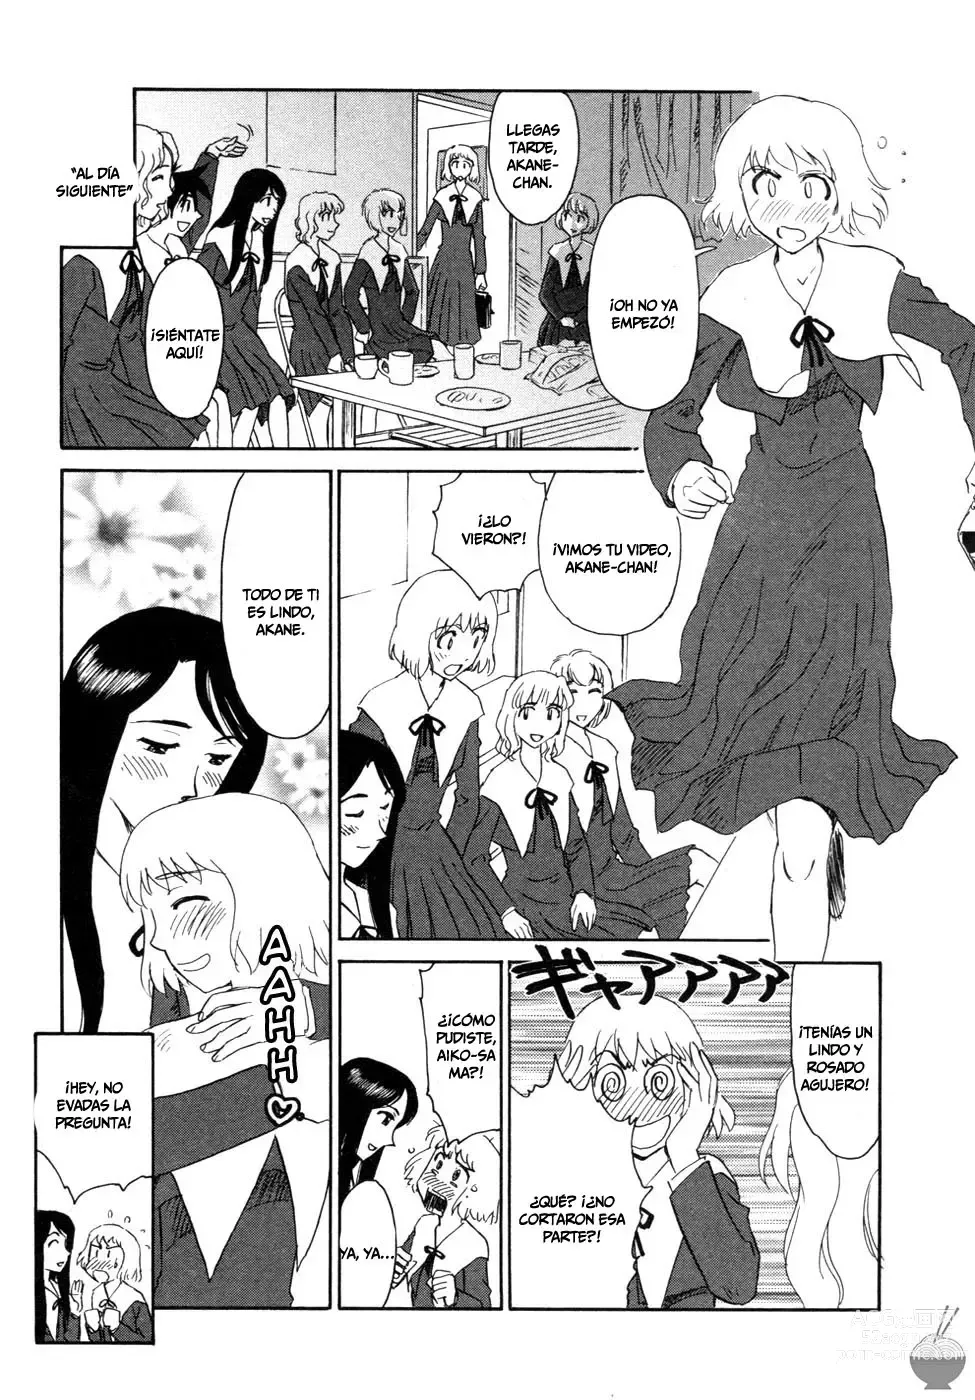 Page 216 of manga Hana no Iro - Colors of Flowers